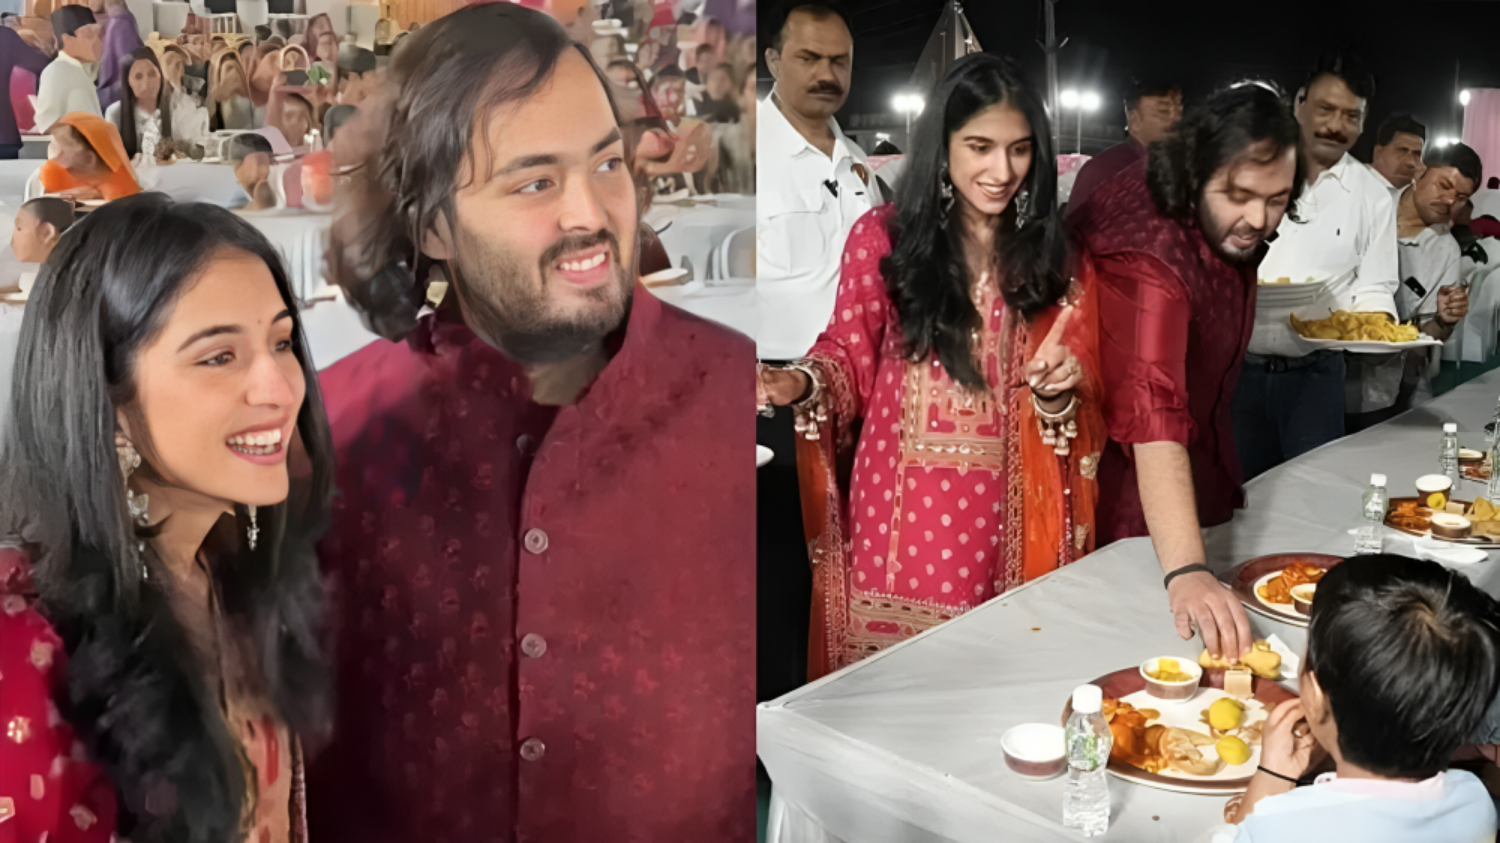 Picture of Bhajiya party at Ambani's place before Anant and Radhika's pre-wedding celebration, Mukesh Ambani also relished the taste